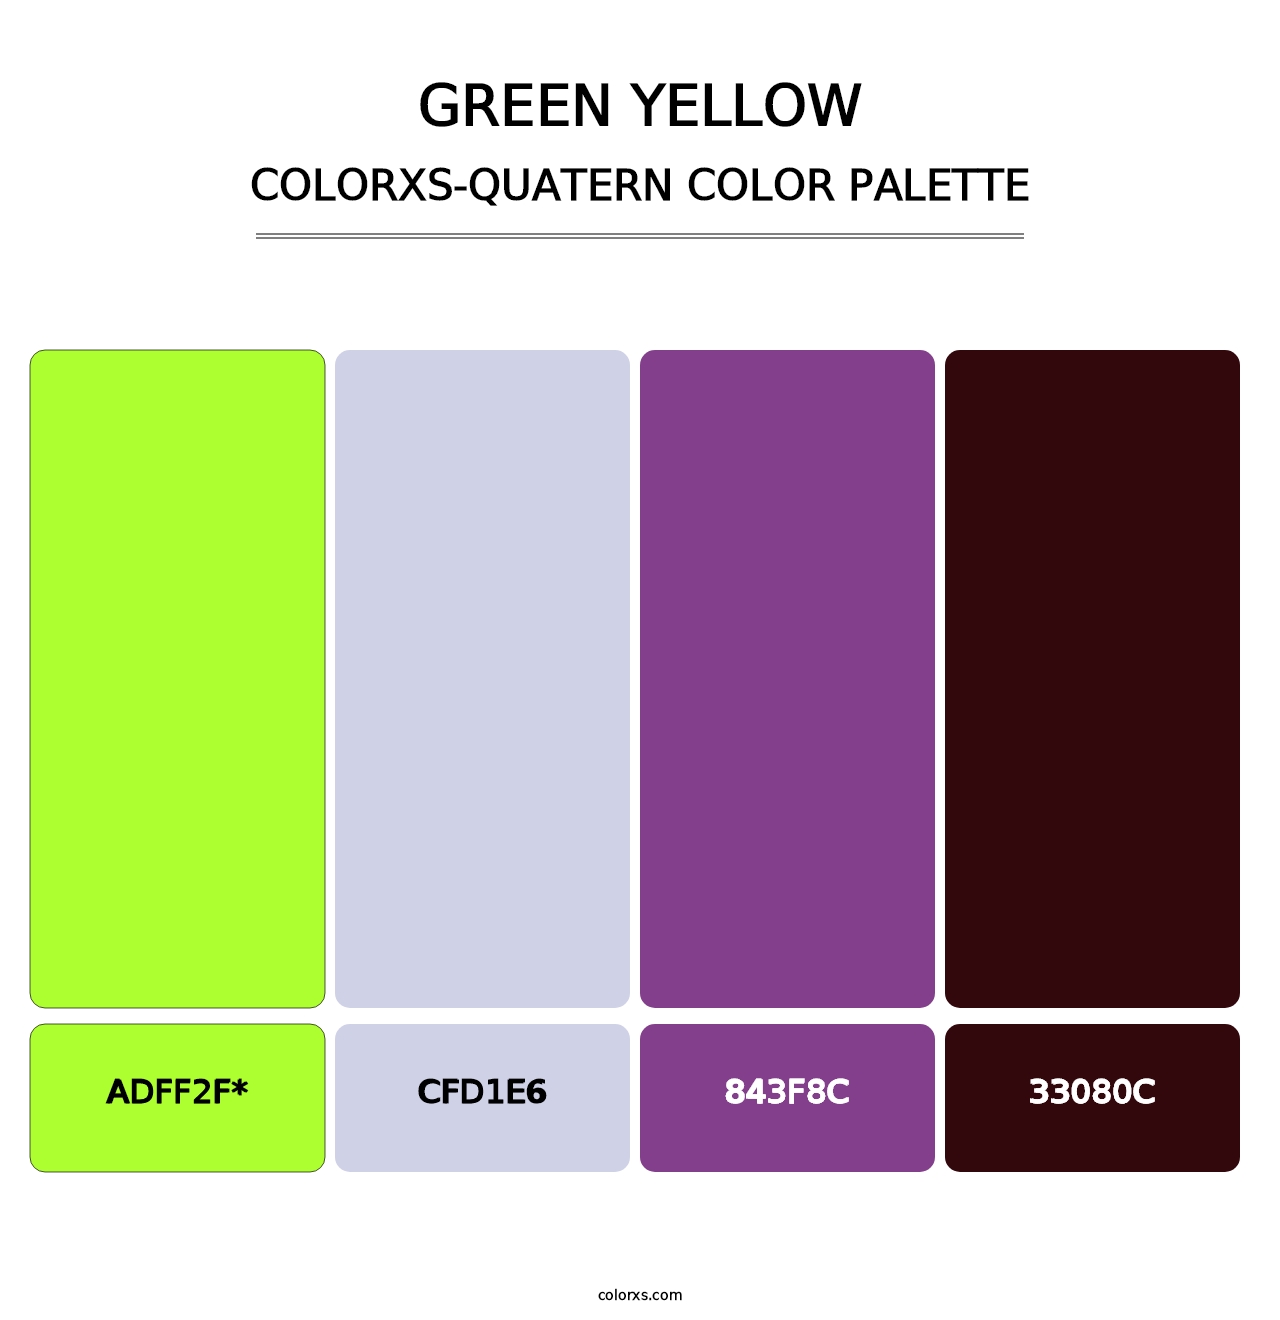 Green Yellow - Colorxs Quatern Palette